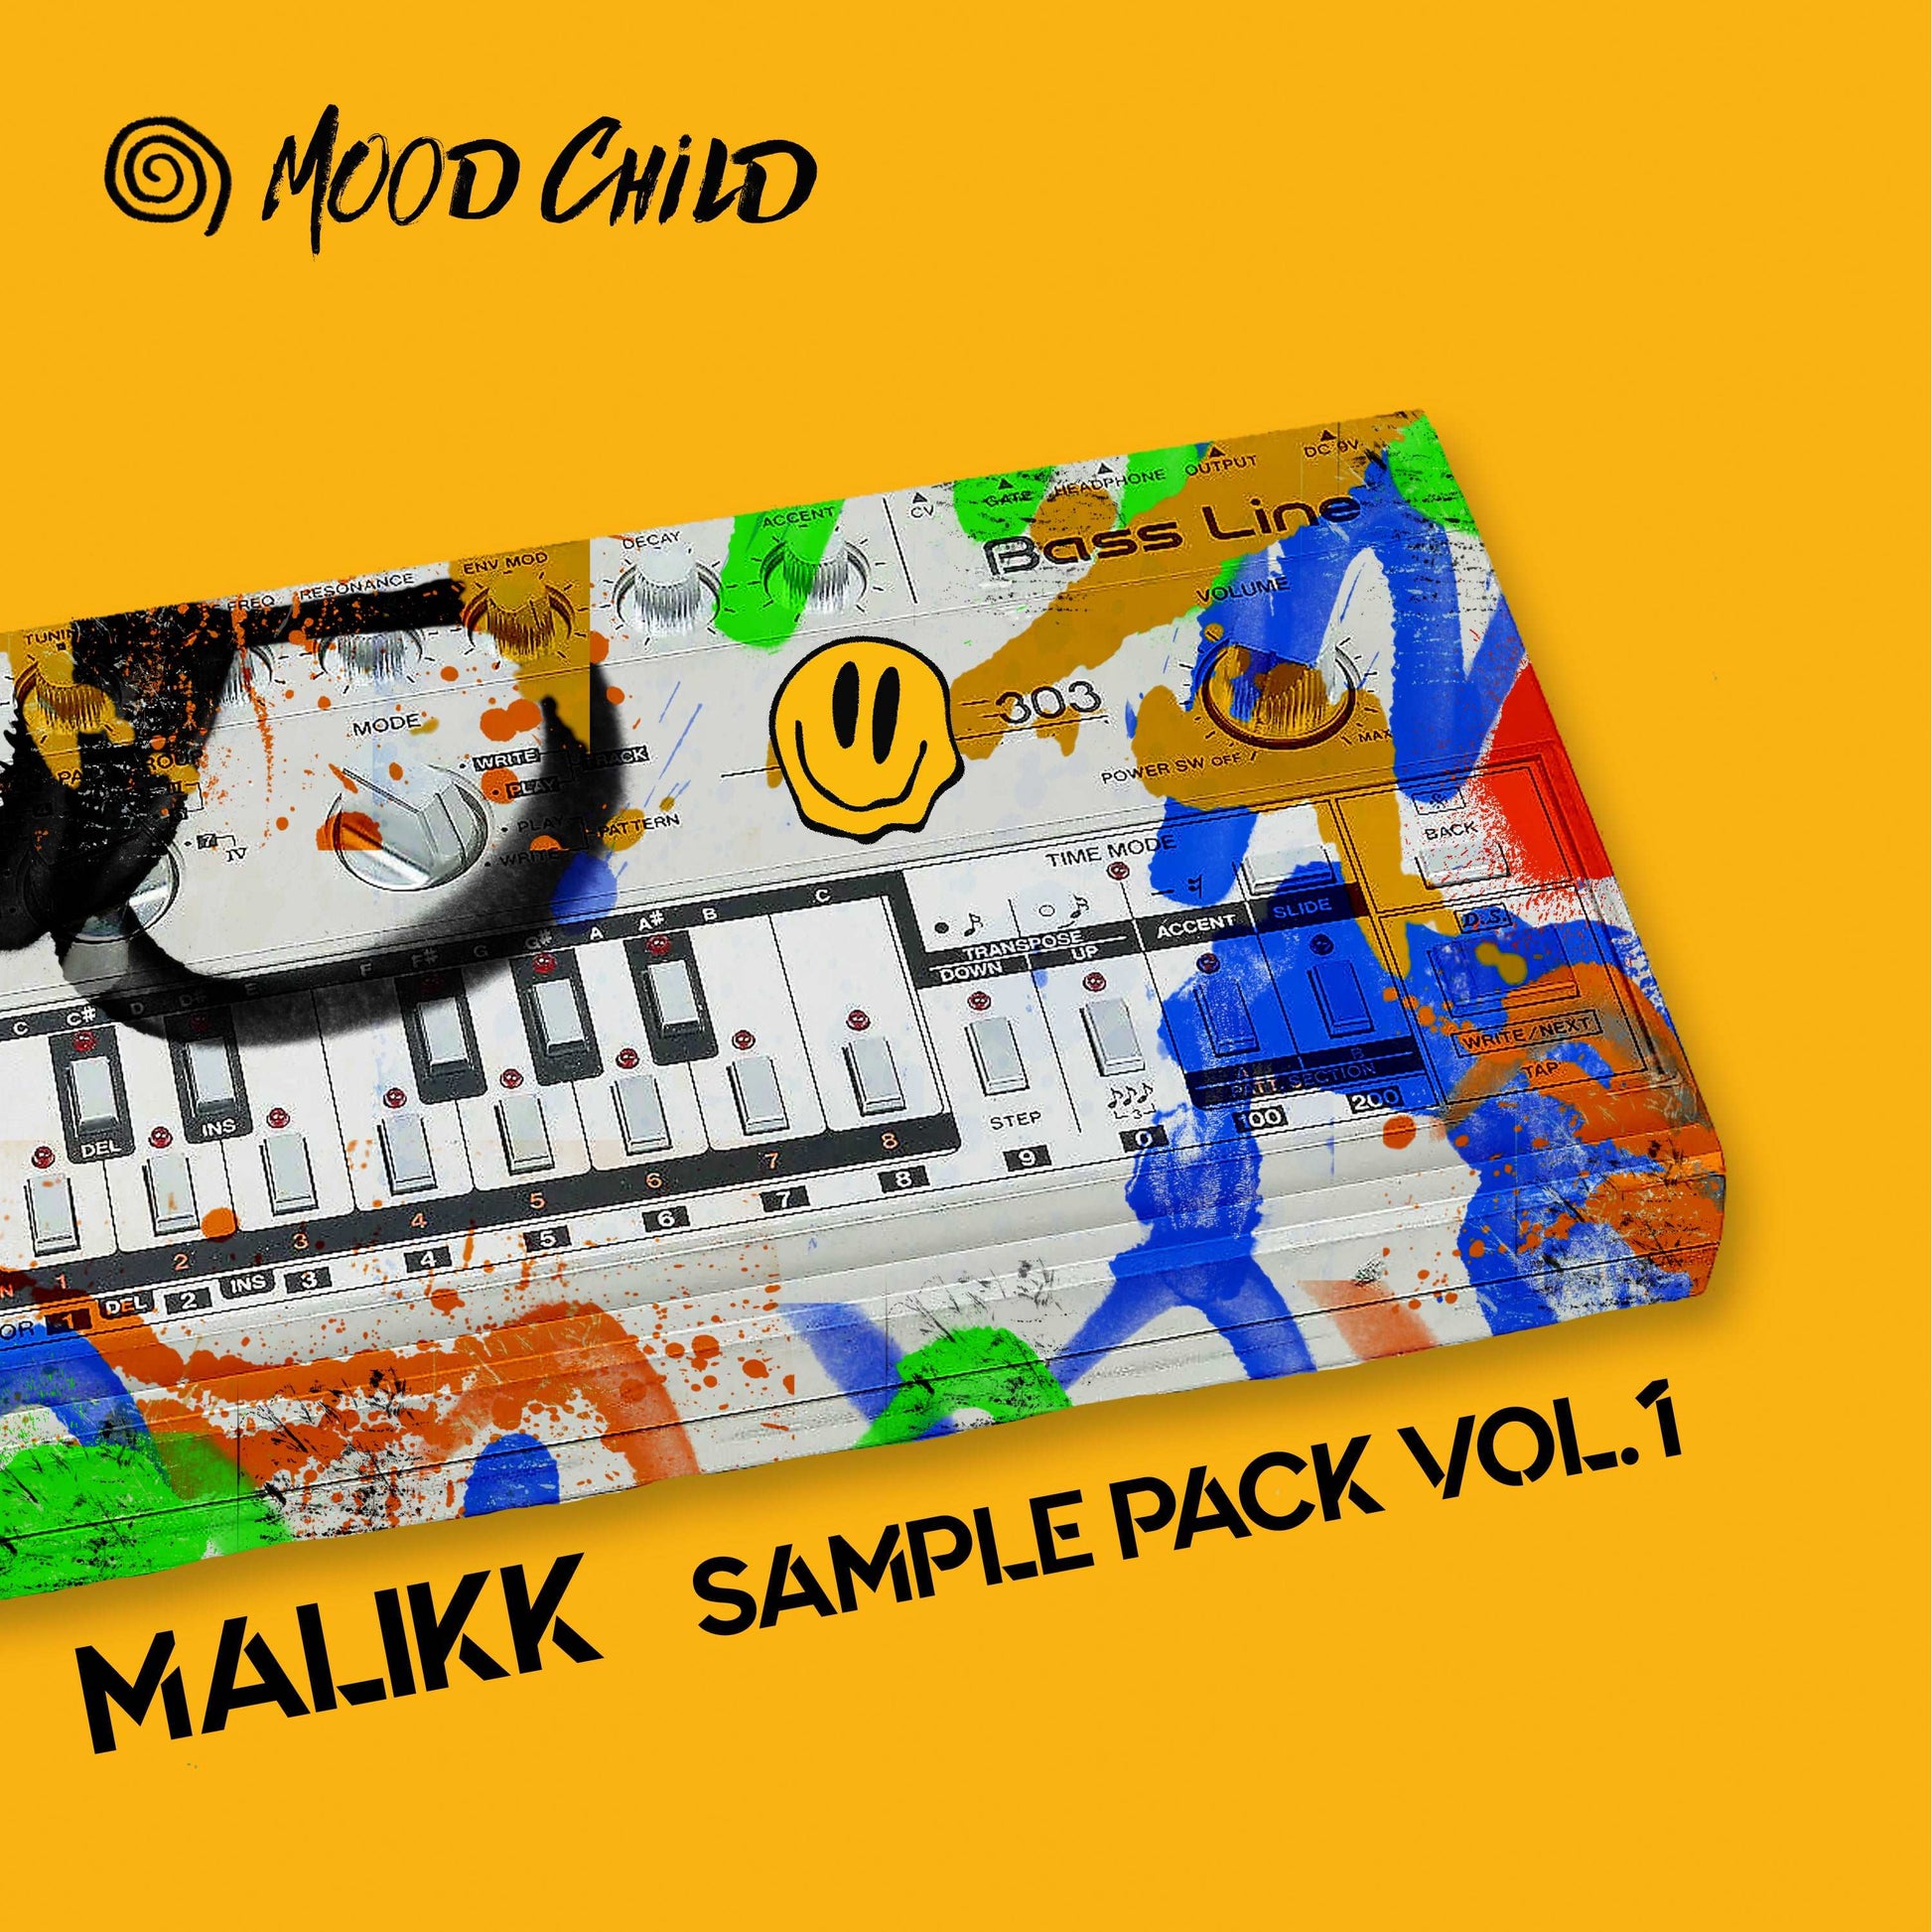 Mood Child Sample Pack Vol.1 by Malikk